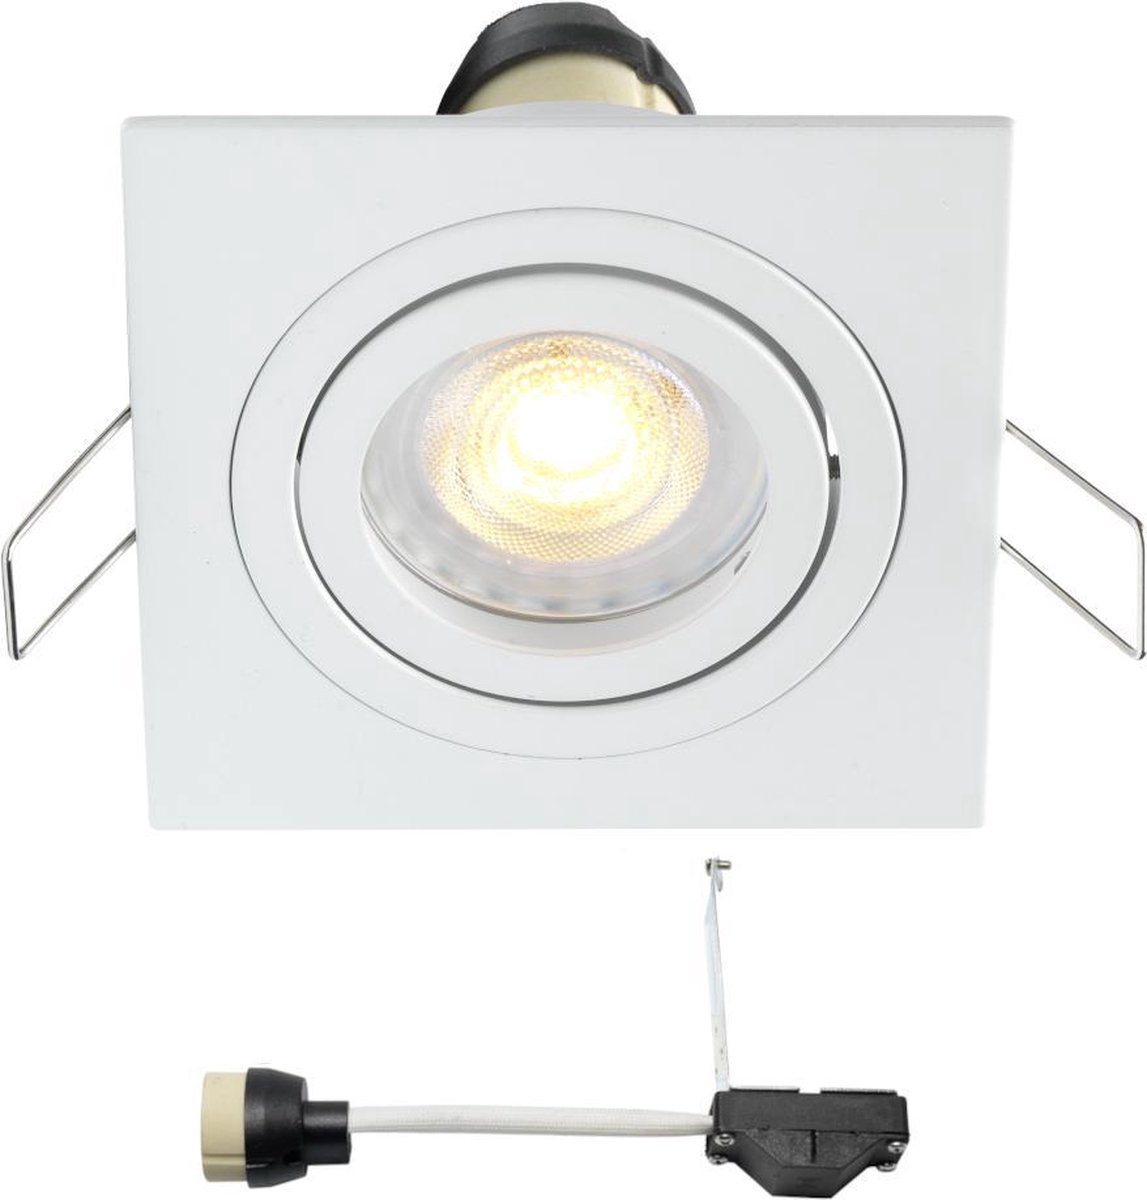 LED inbouwspot Coblux - wit - inbouwspots / downlights / plafondspots - 4W / vierkant / dimbaar / kantelbaar / 230V / IP20 / warmwit